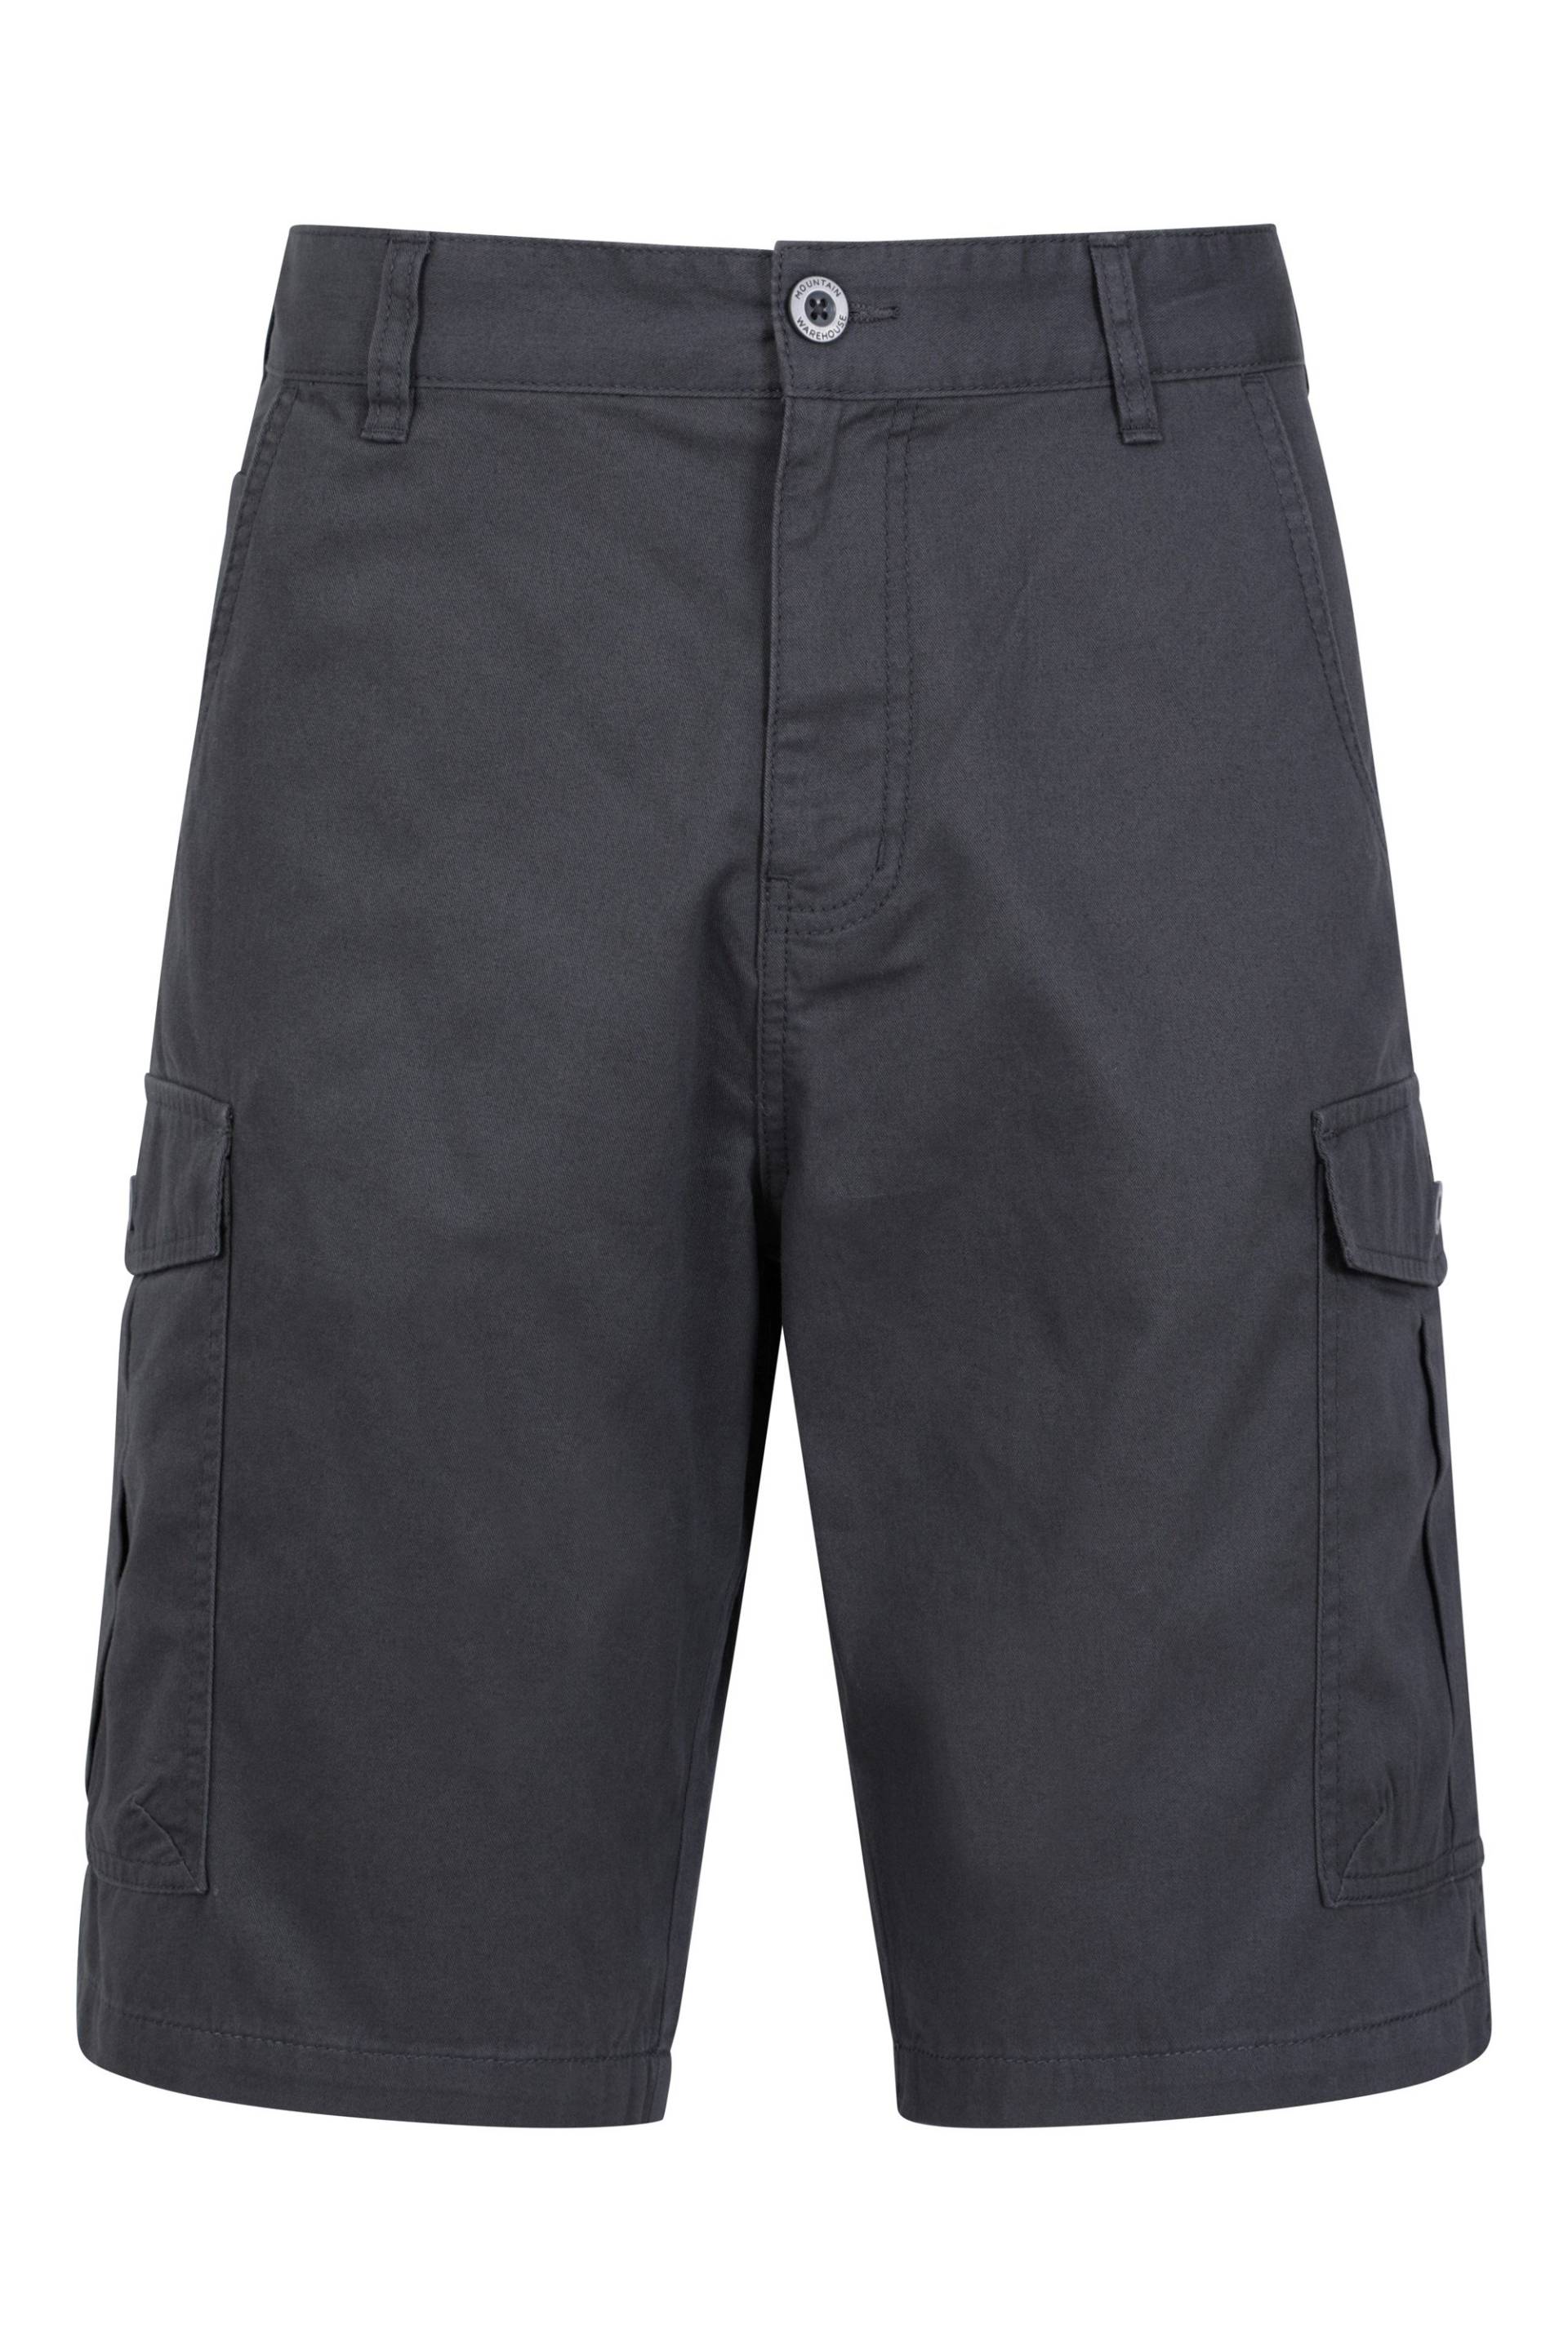 Lakeside Herren-Shorts - Grau von Mountain Warehouse